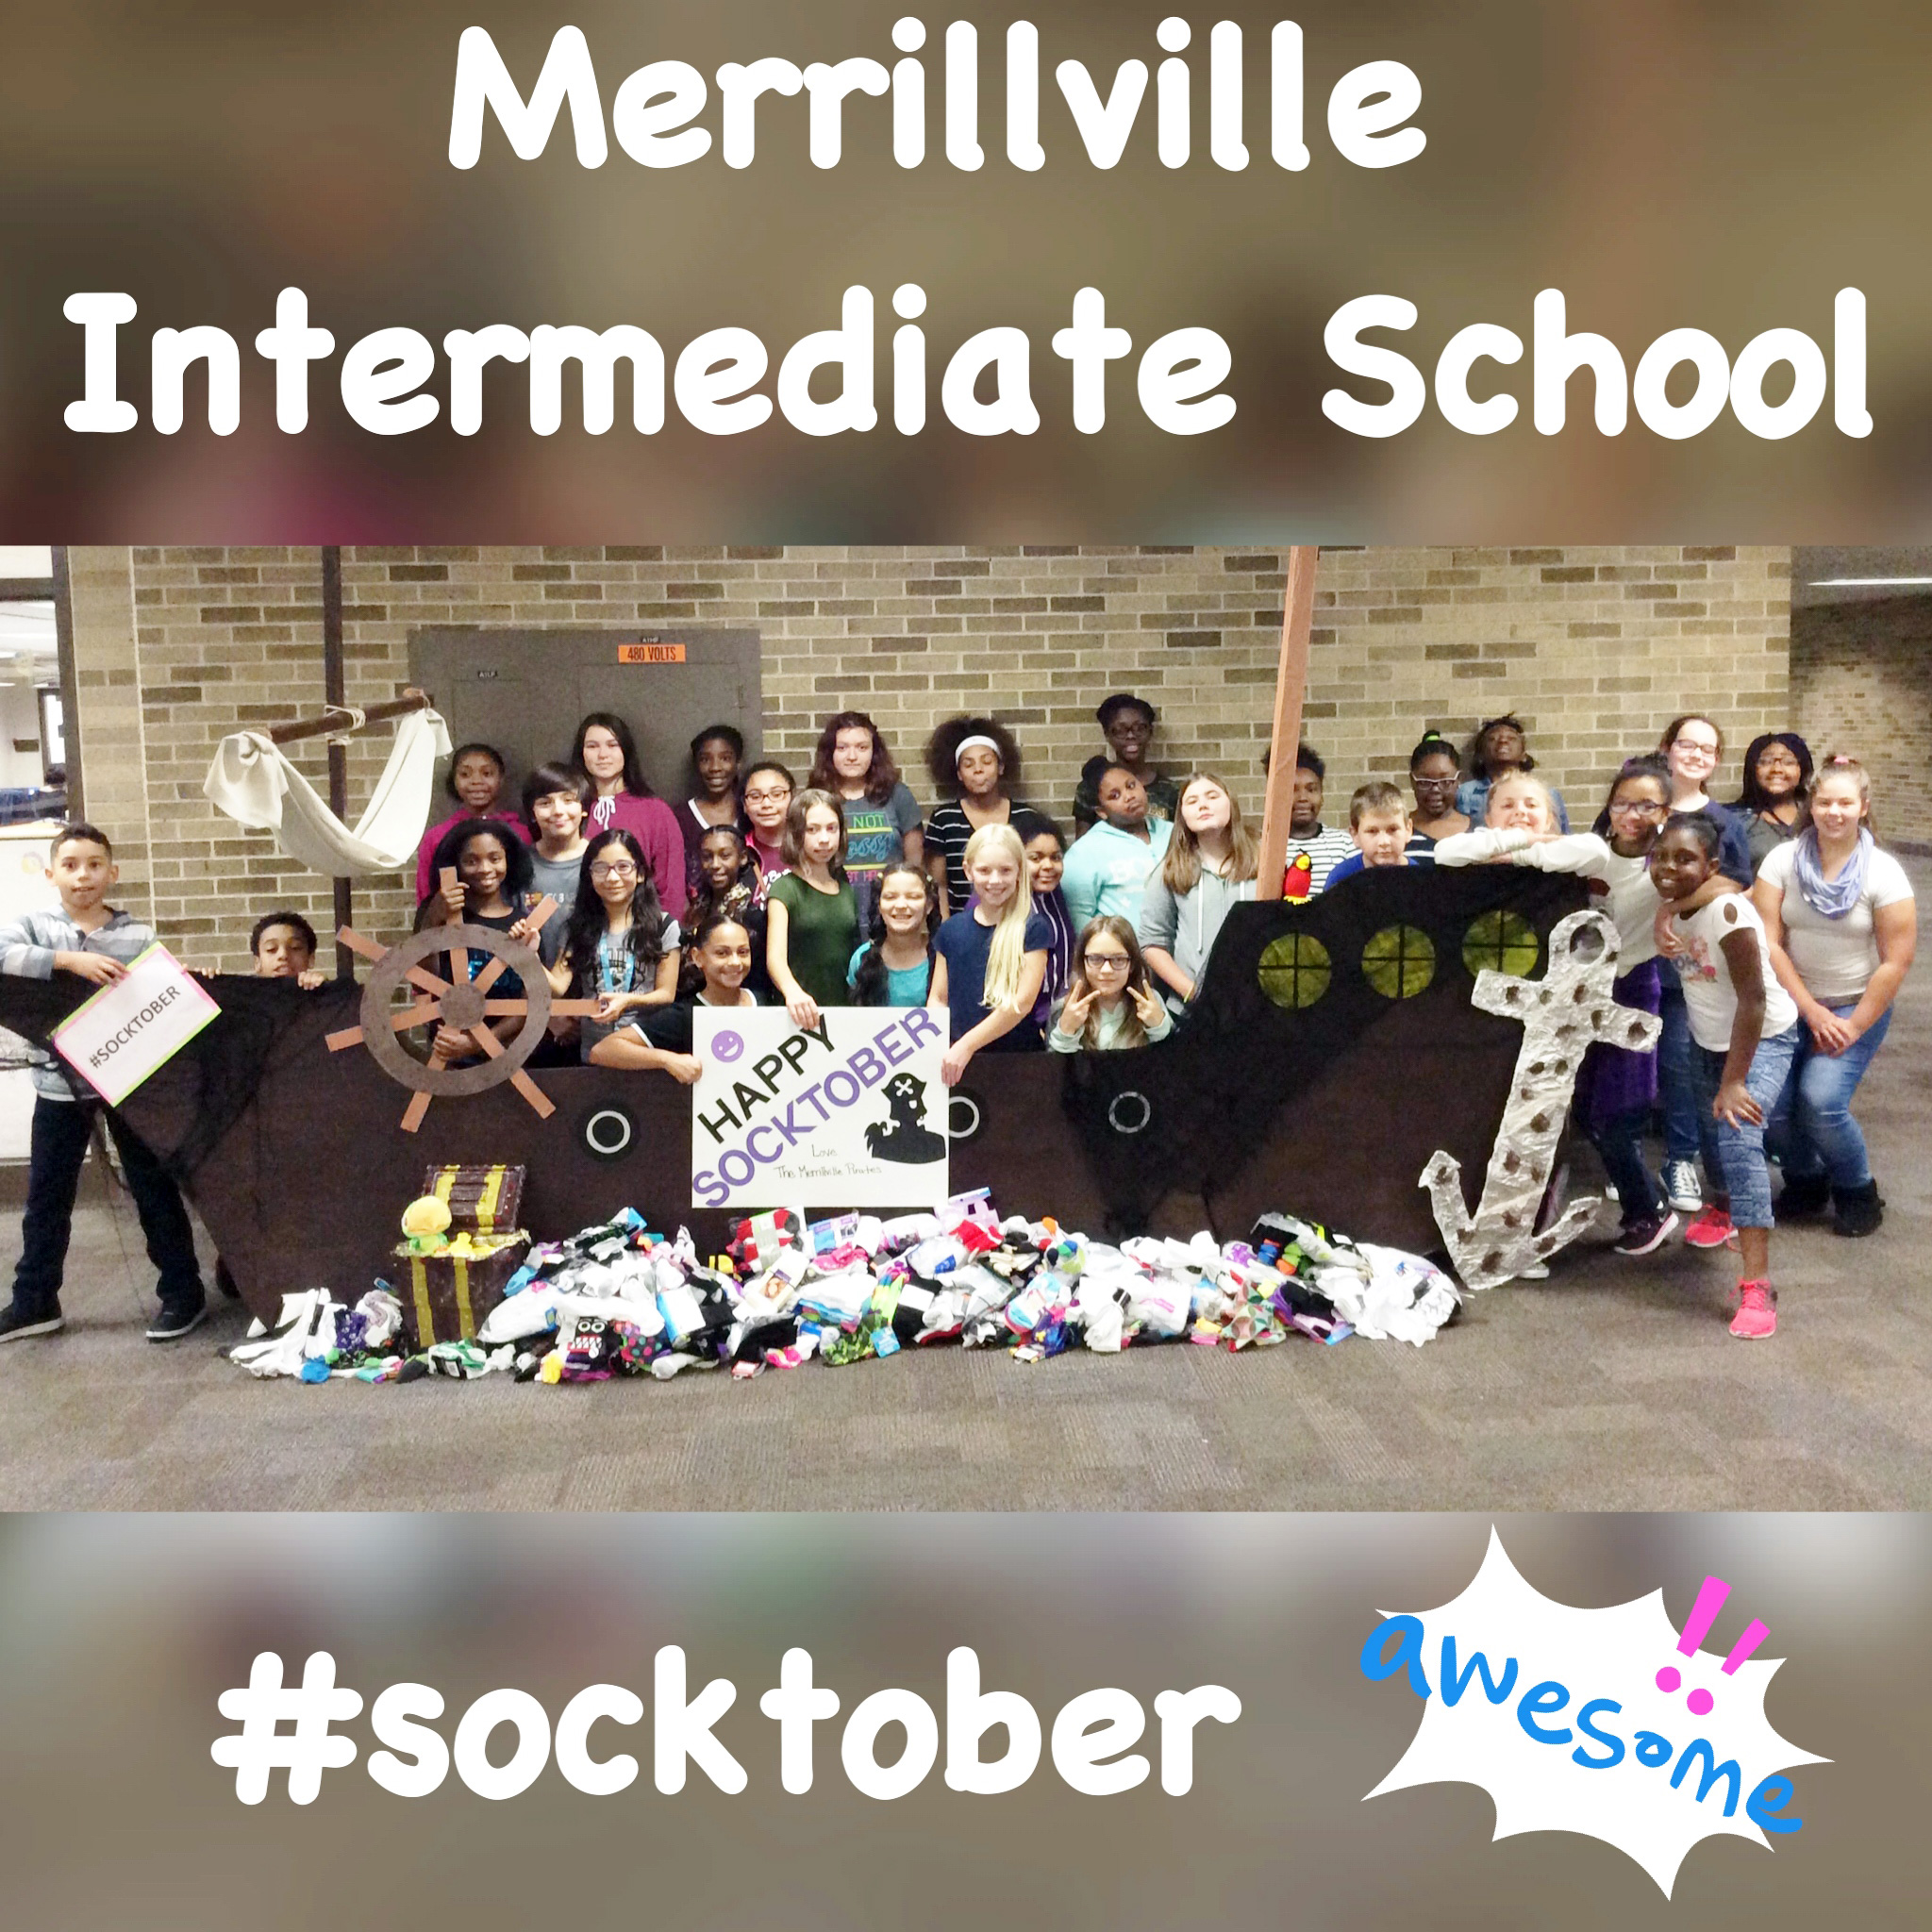 Merrillville Intermediate School Supports Haven House with “Socktober”